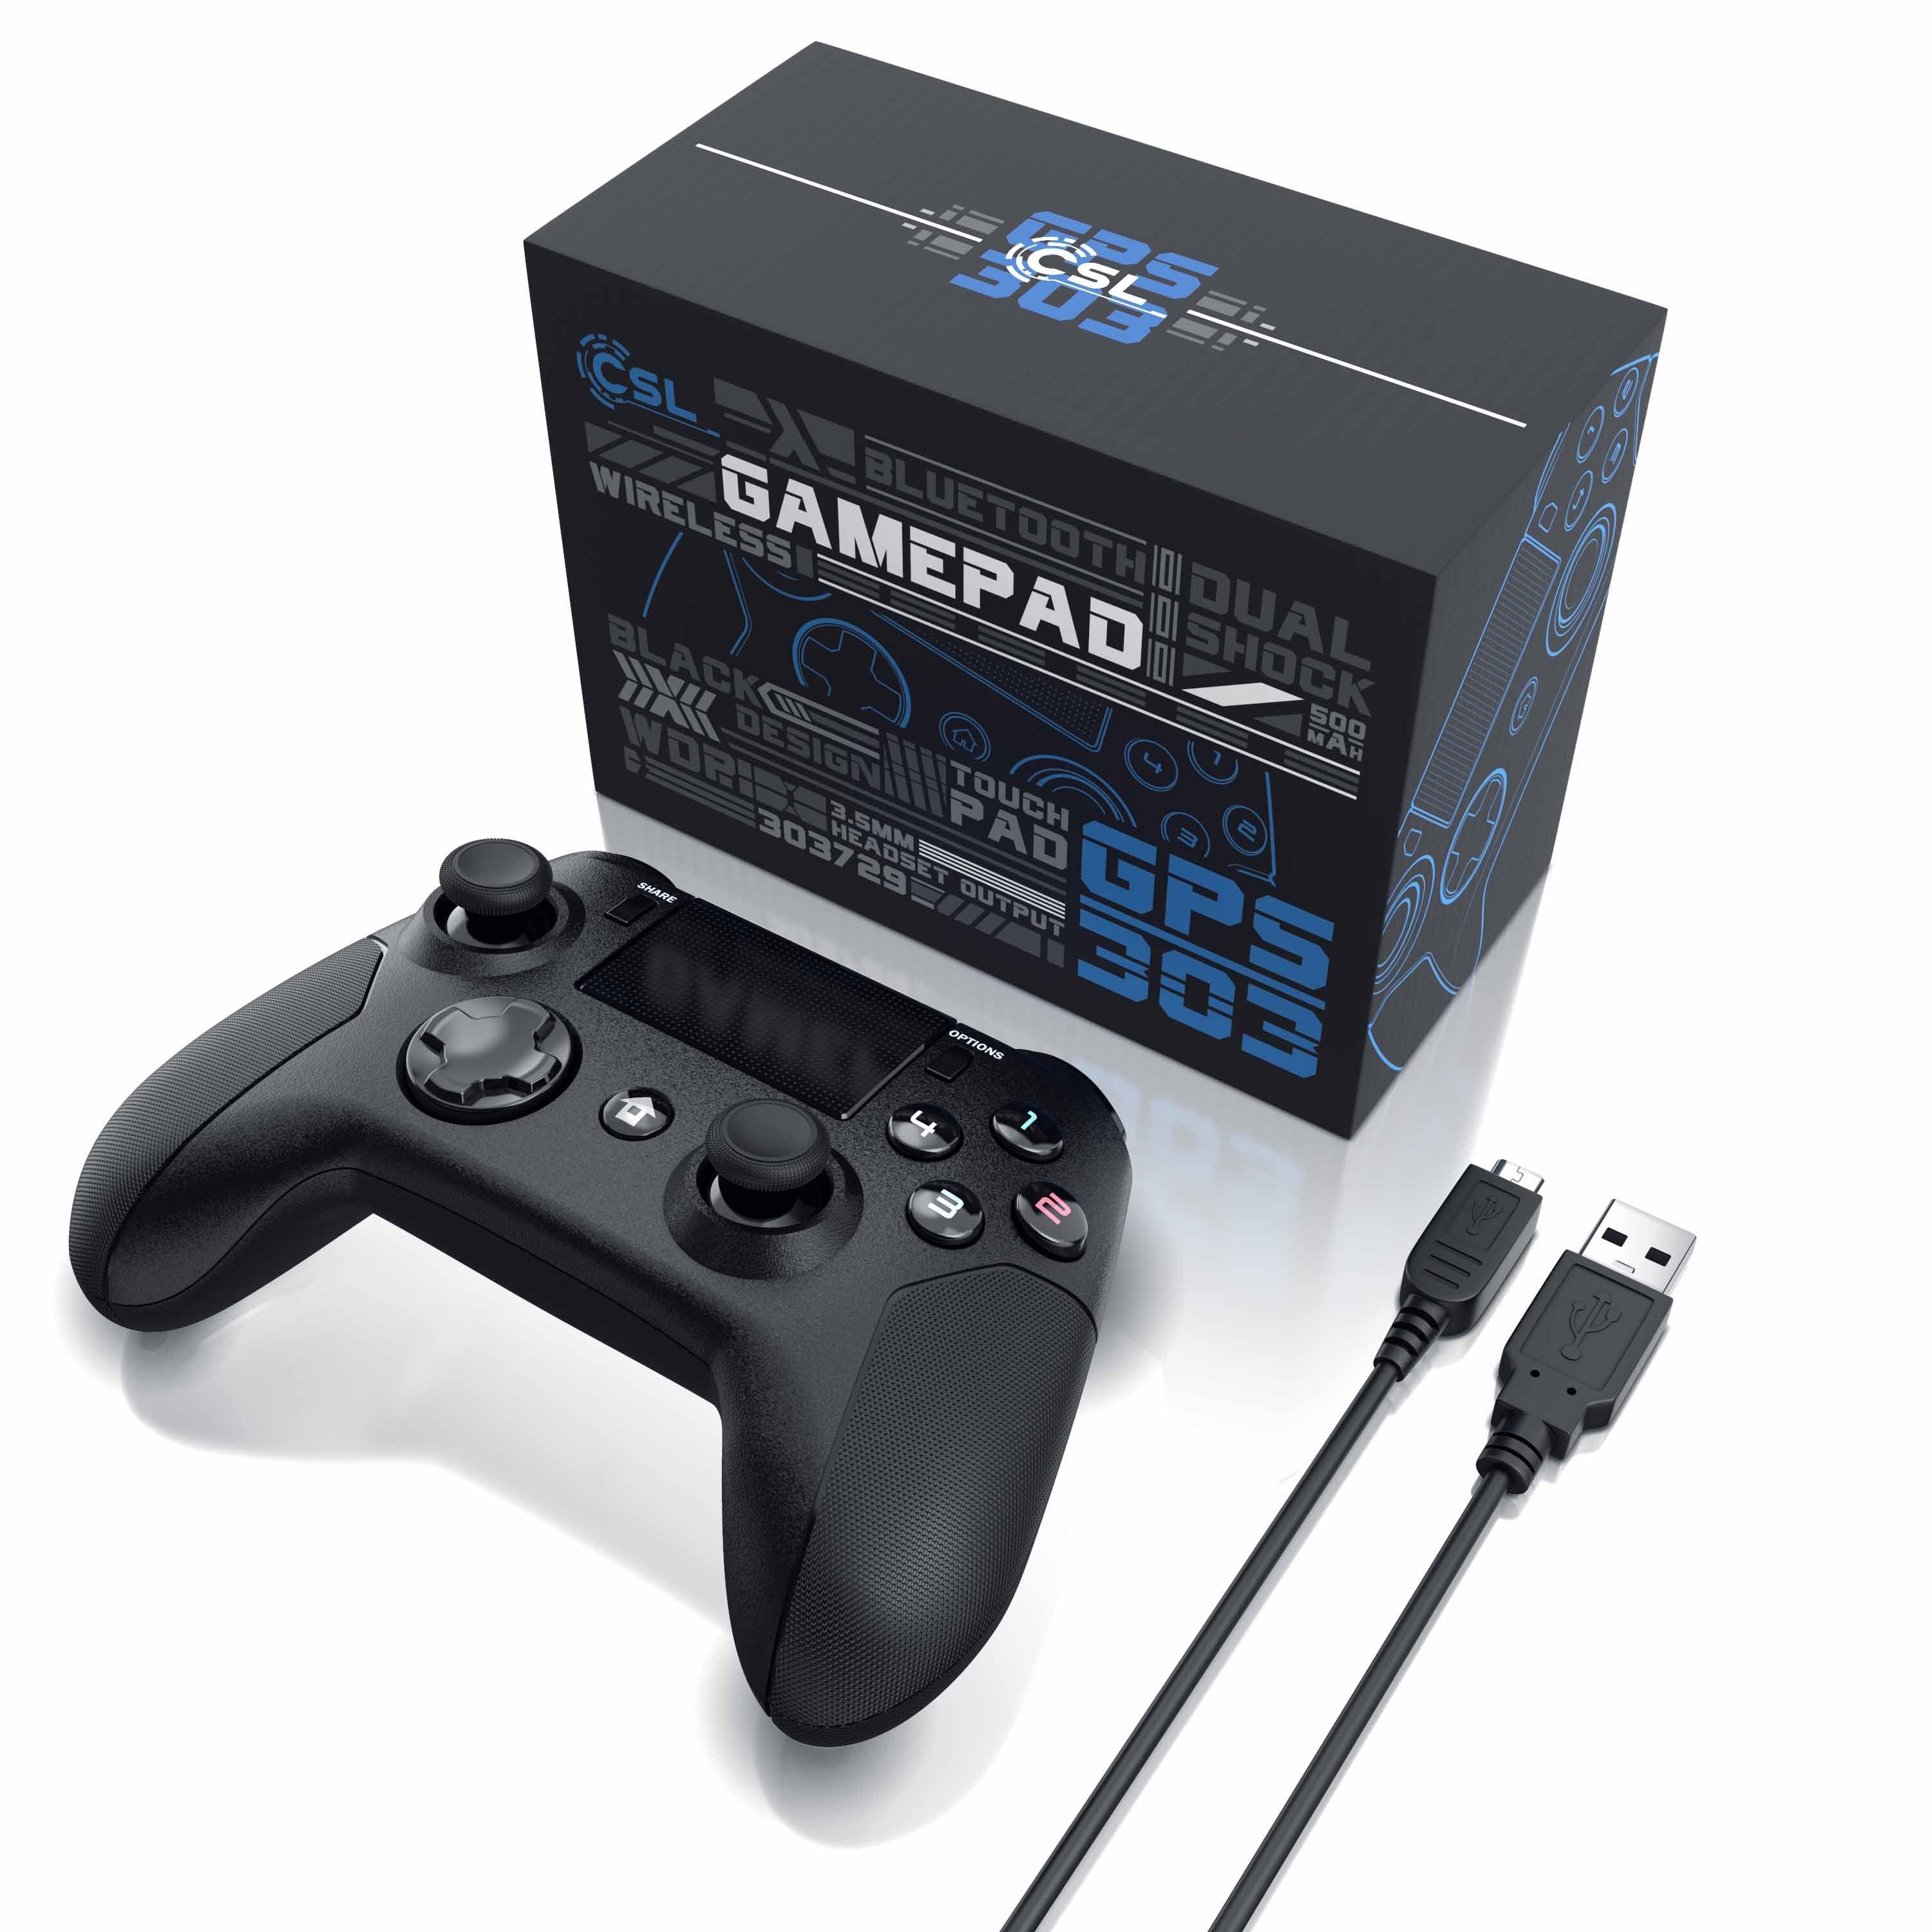 CSL PlayStation 4-Controller (1 3,5mm, Gyrosensor) Dual Touchpad, PS4, für St., Gamepad Bluetooth Vibration